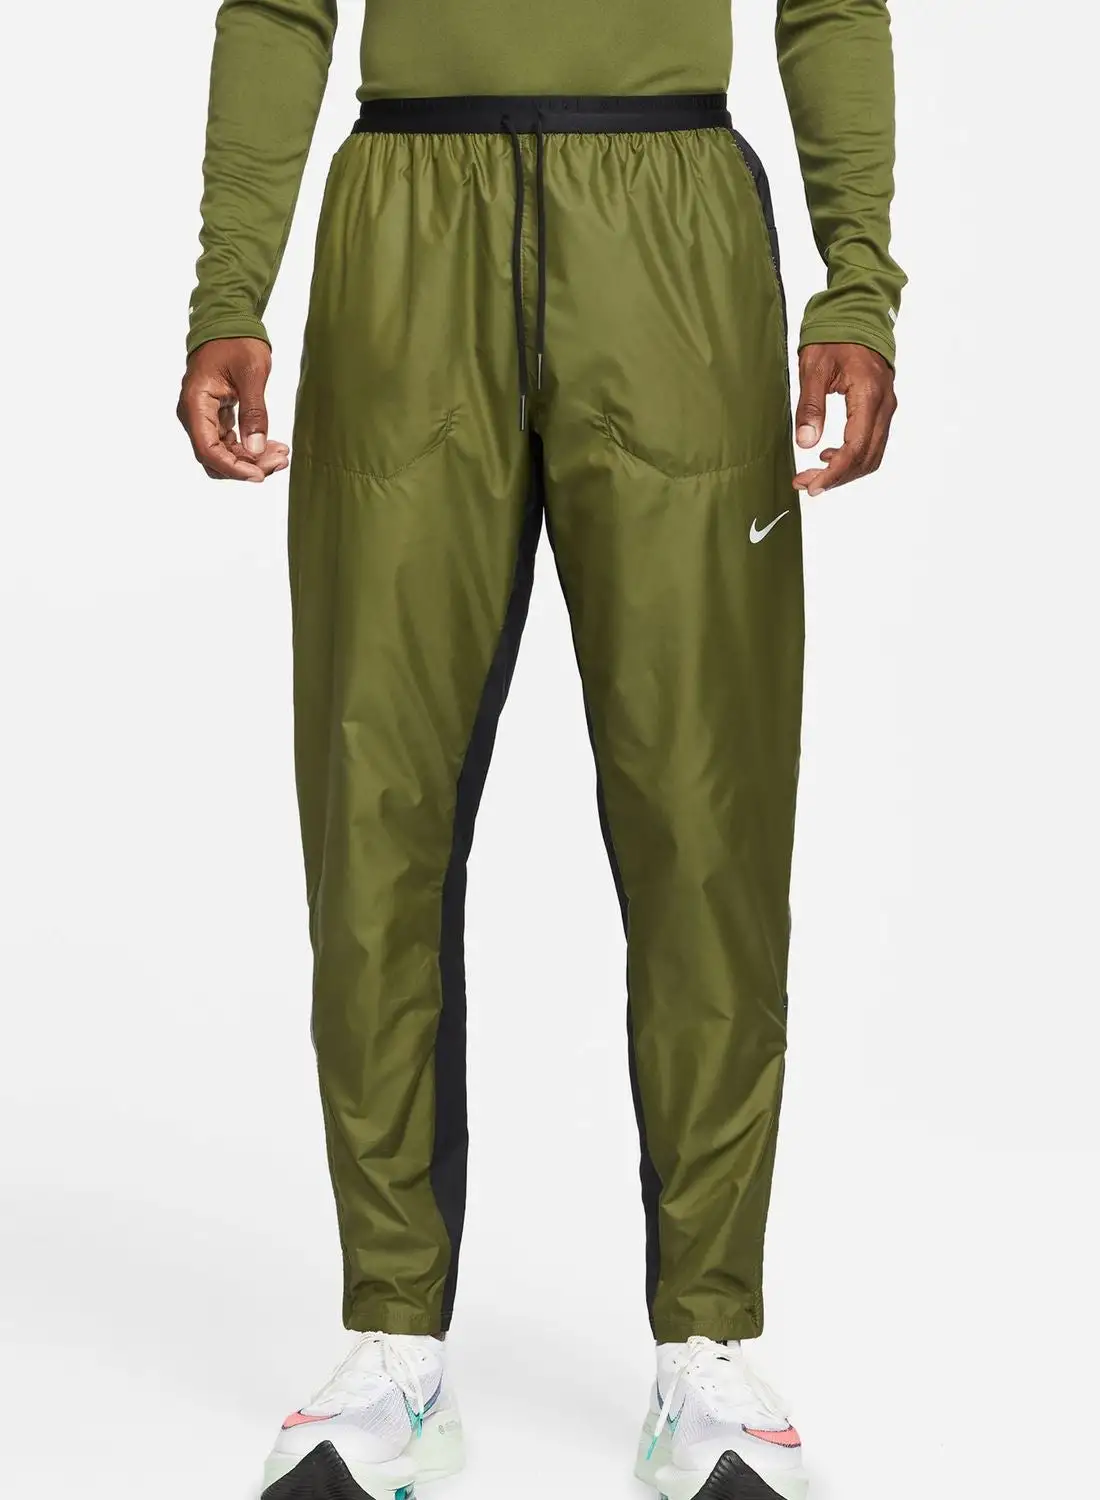 Nike Storm-Fit Run Division Phenom Elite Flash Pants